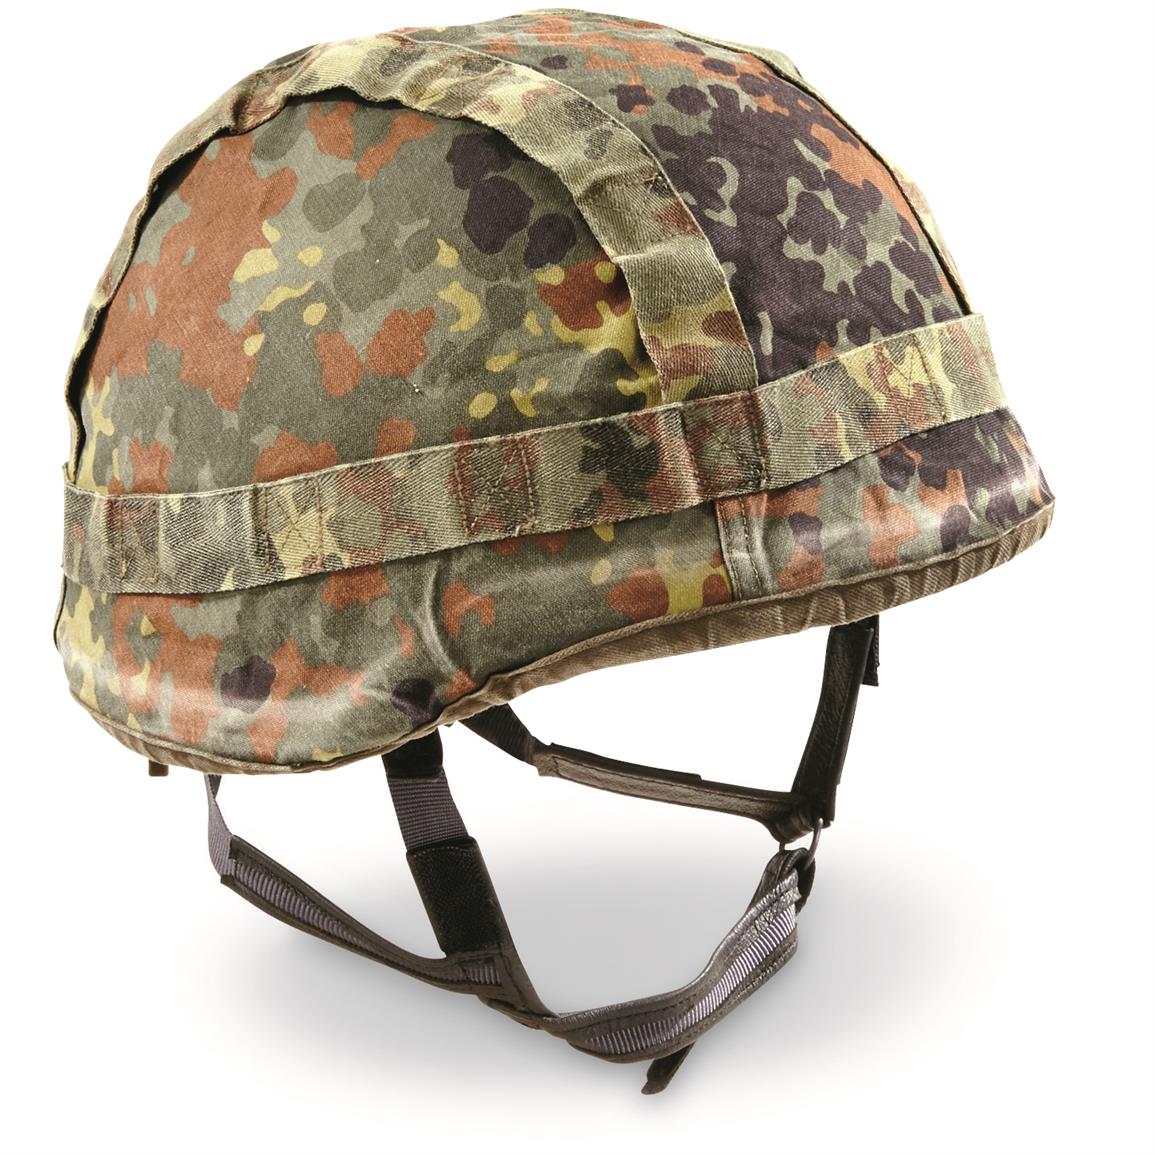 NATO Military  Surplus Flecktarn Camo Helmet  with Kevlar 